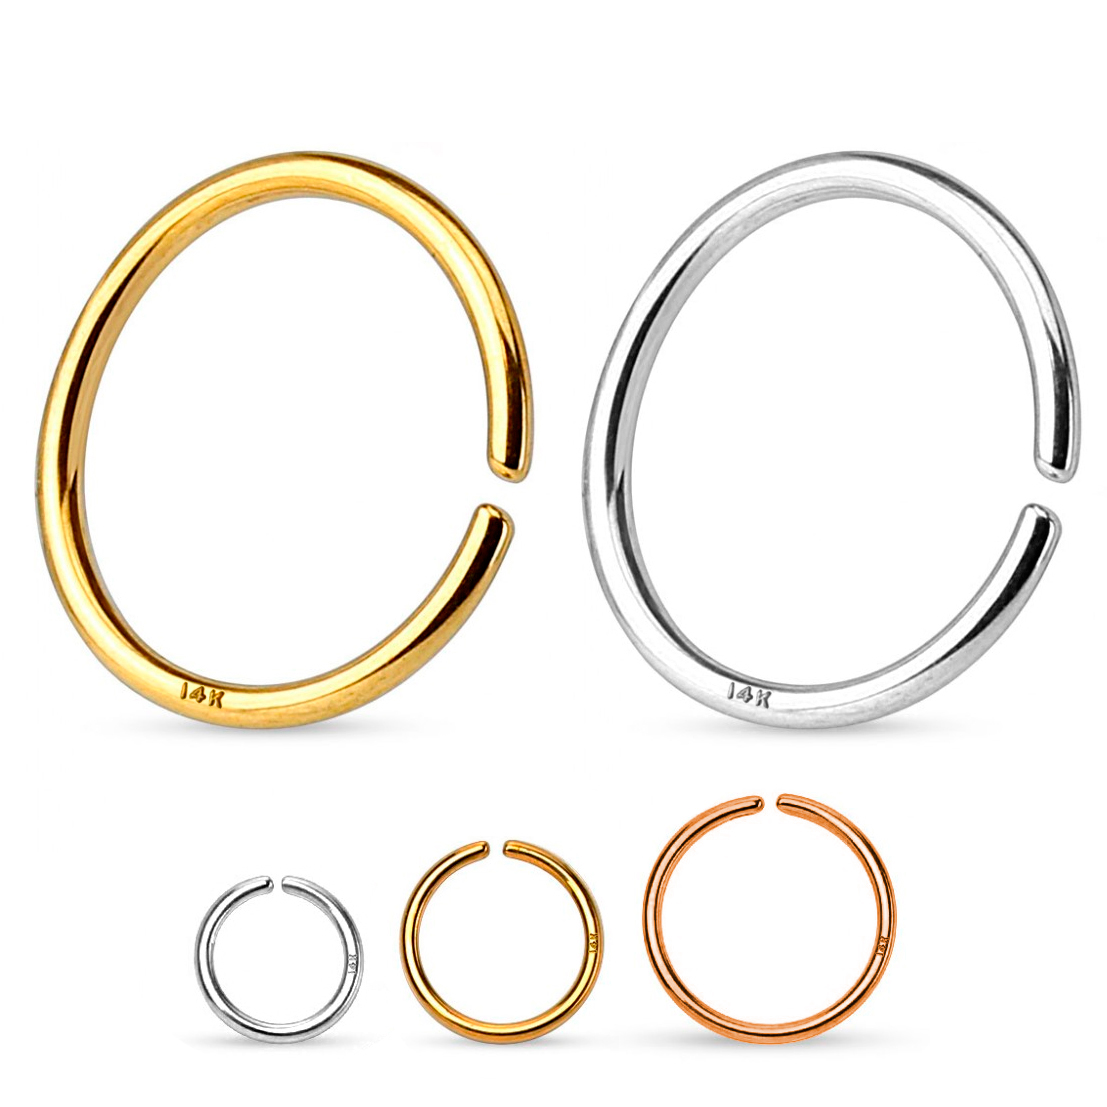 Endless ring semplice d'oro 14 carati